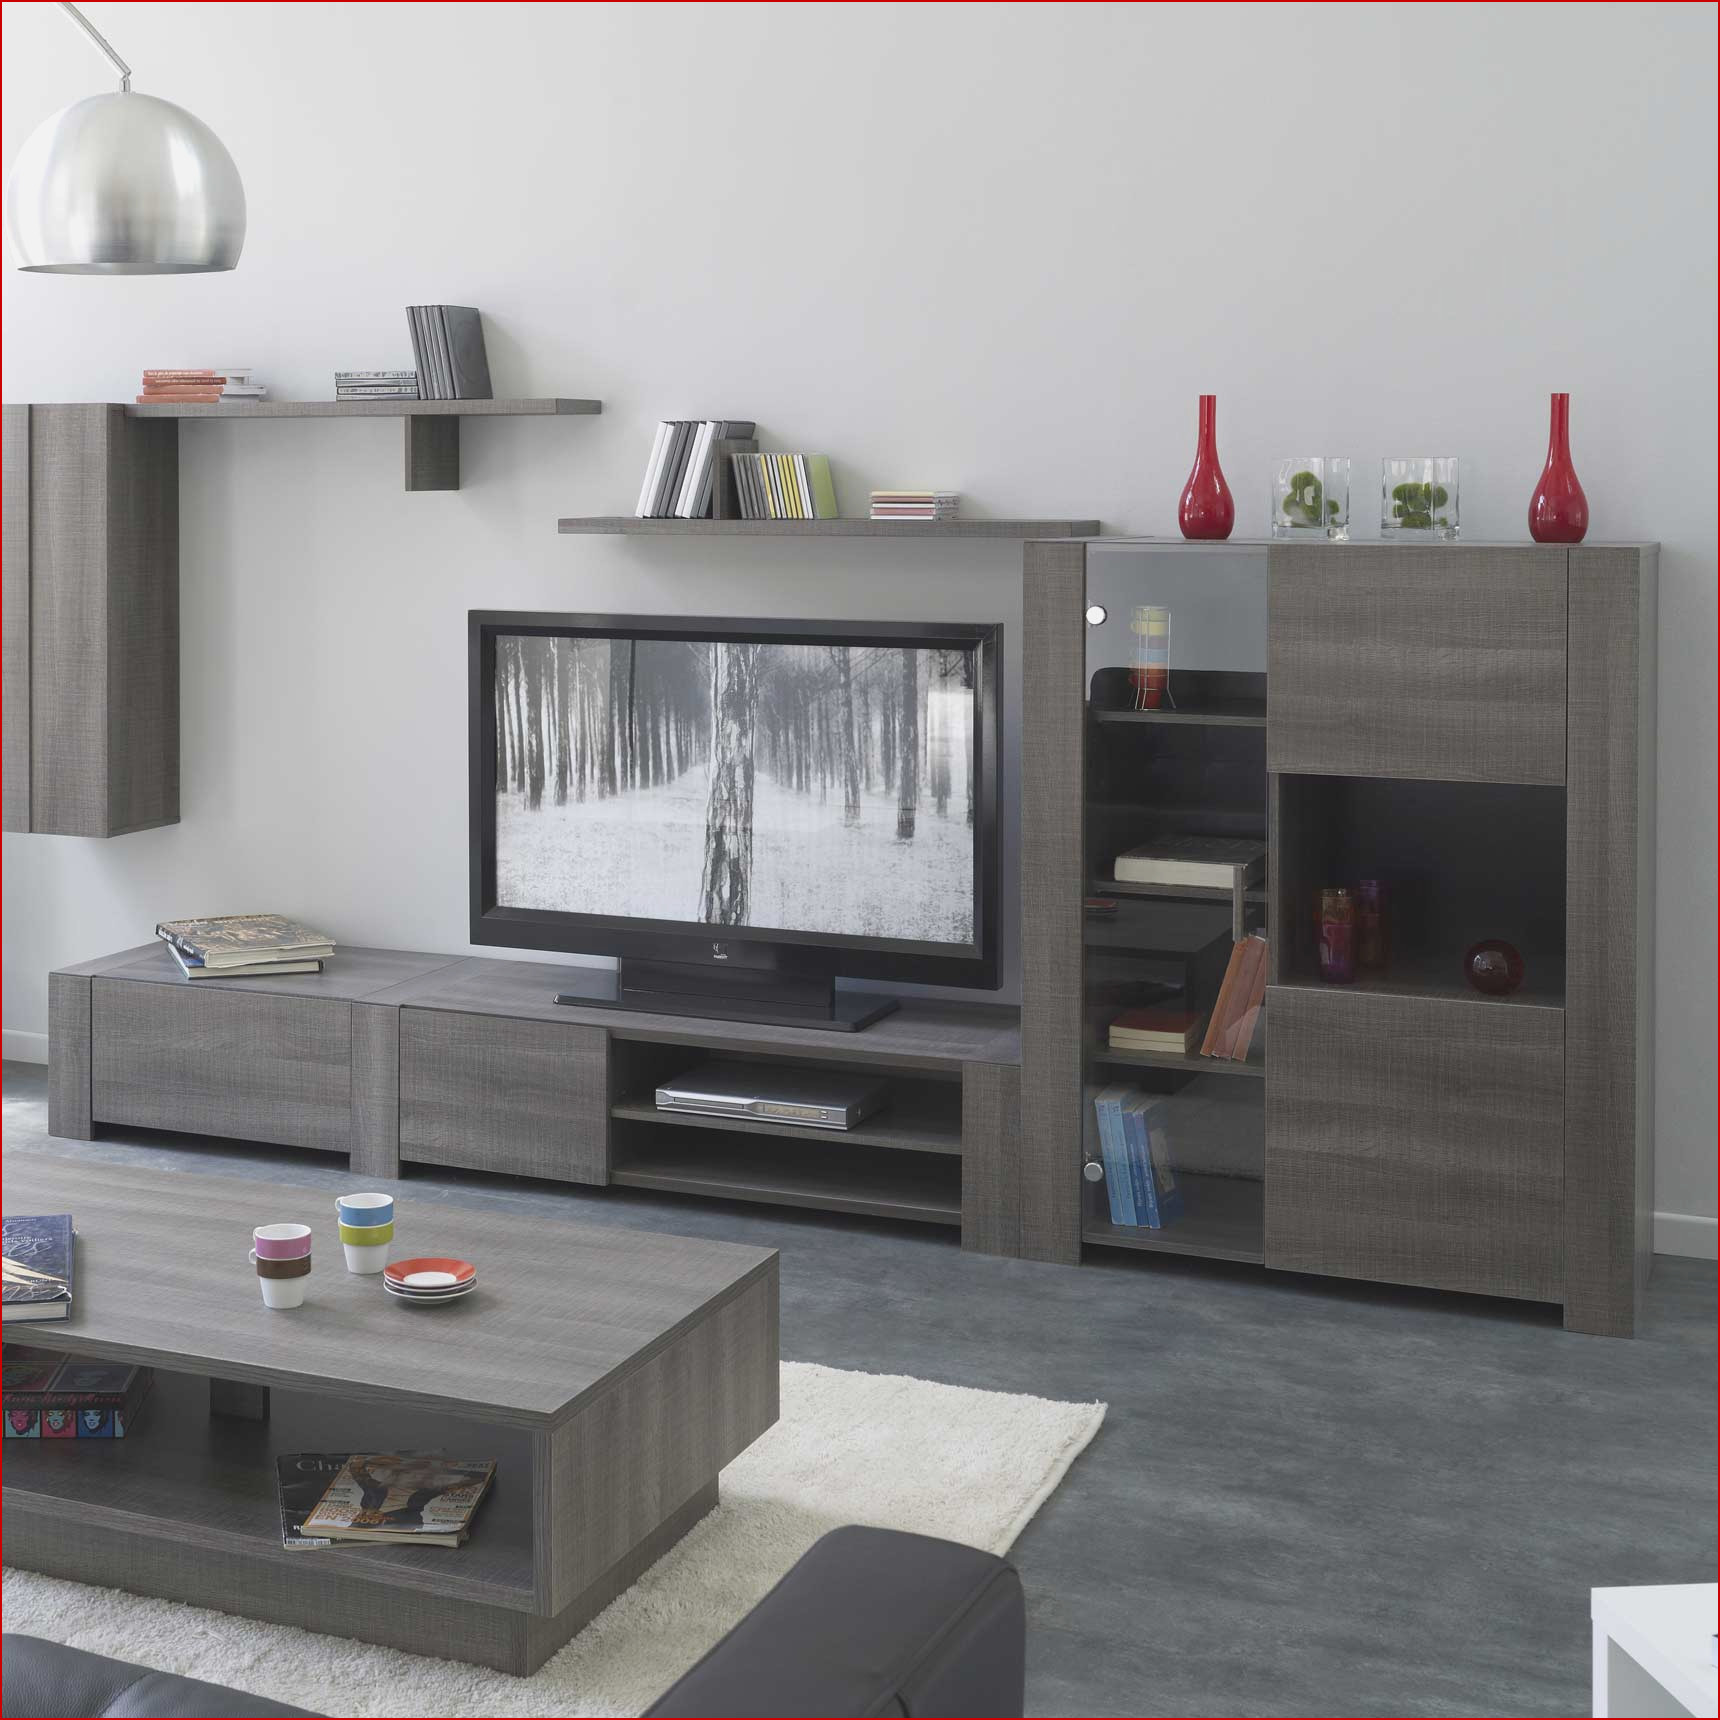 Table basse et meuble tv en bois